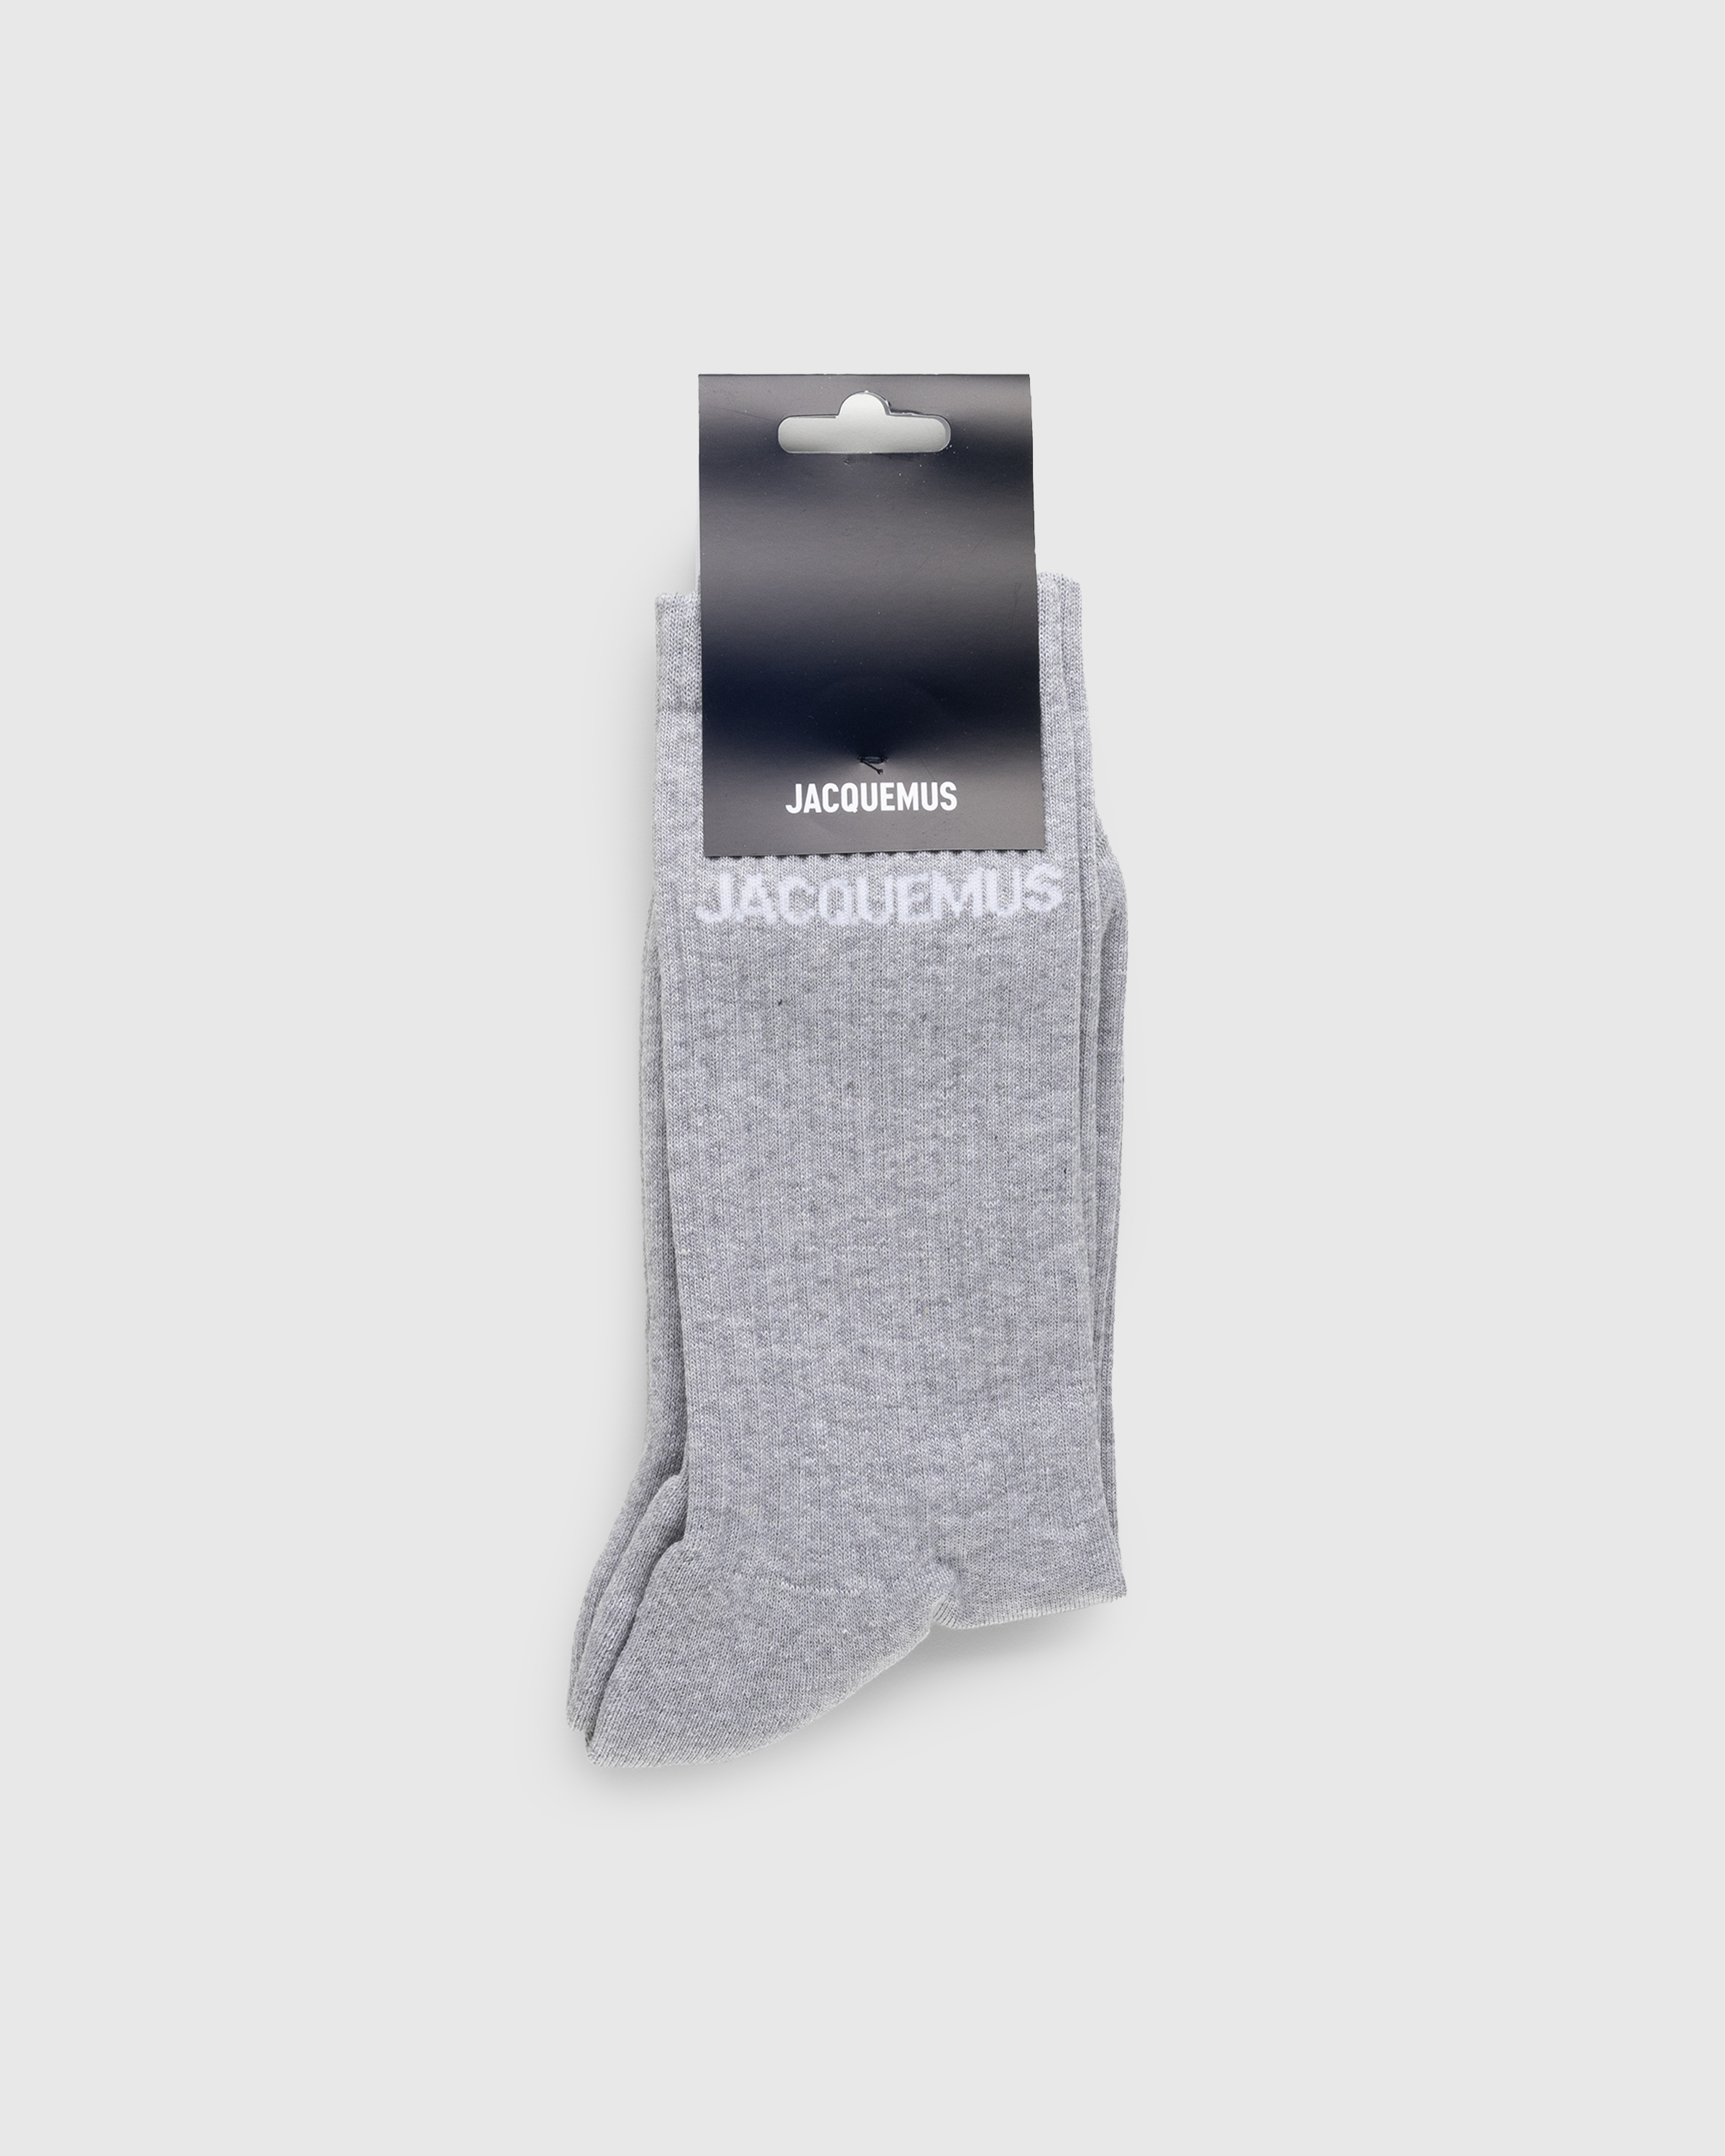 JACQUEMUS – Les Chaussettes Medium Grey - Ankle - Grey - Image 3